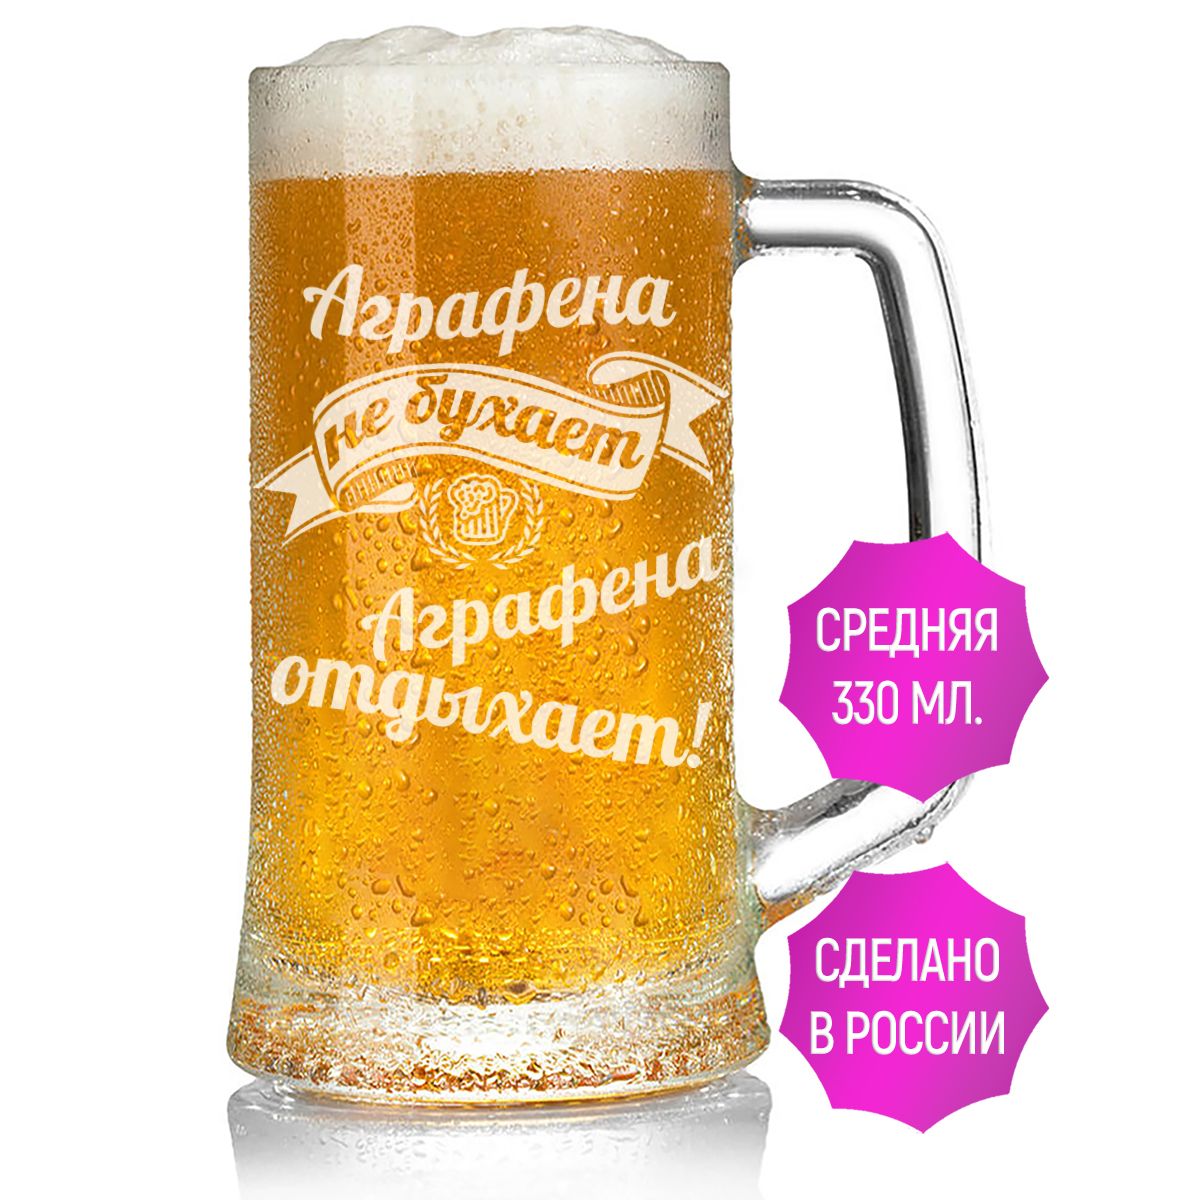 Бокал для пива AV Podarki Аграфена не бухает Аграфена отдыхает